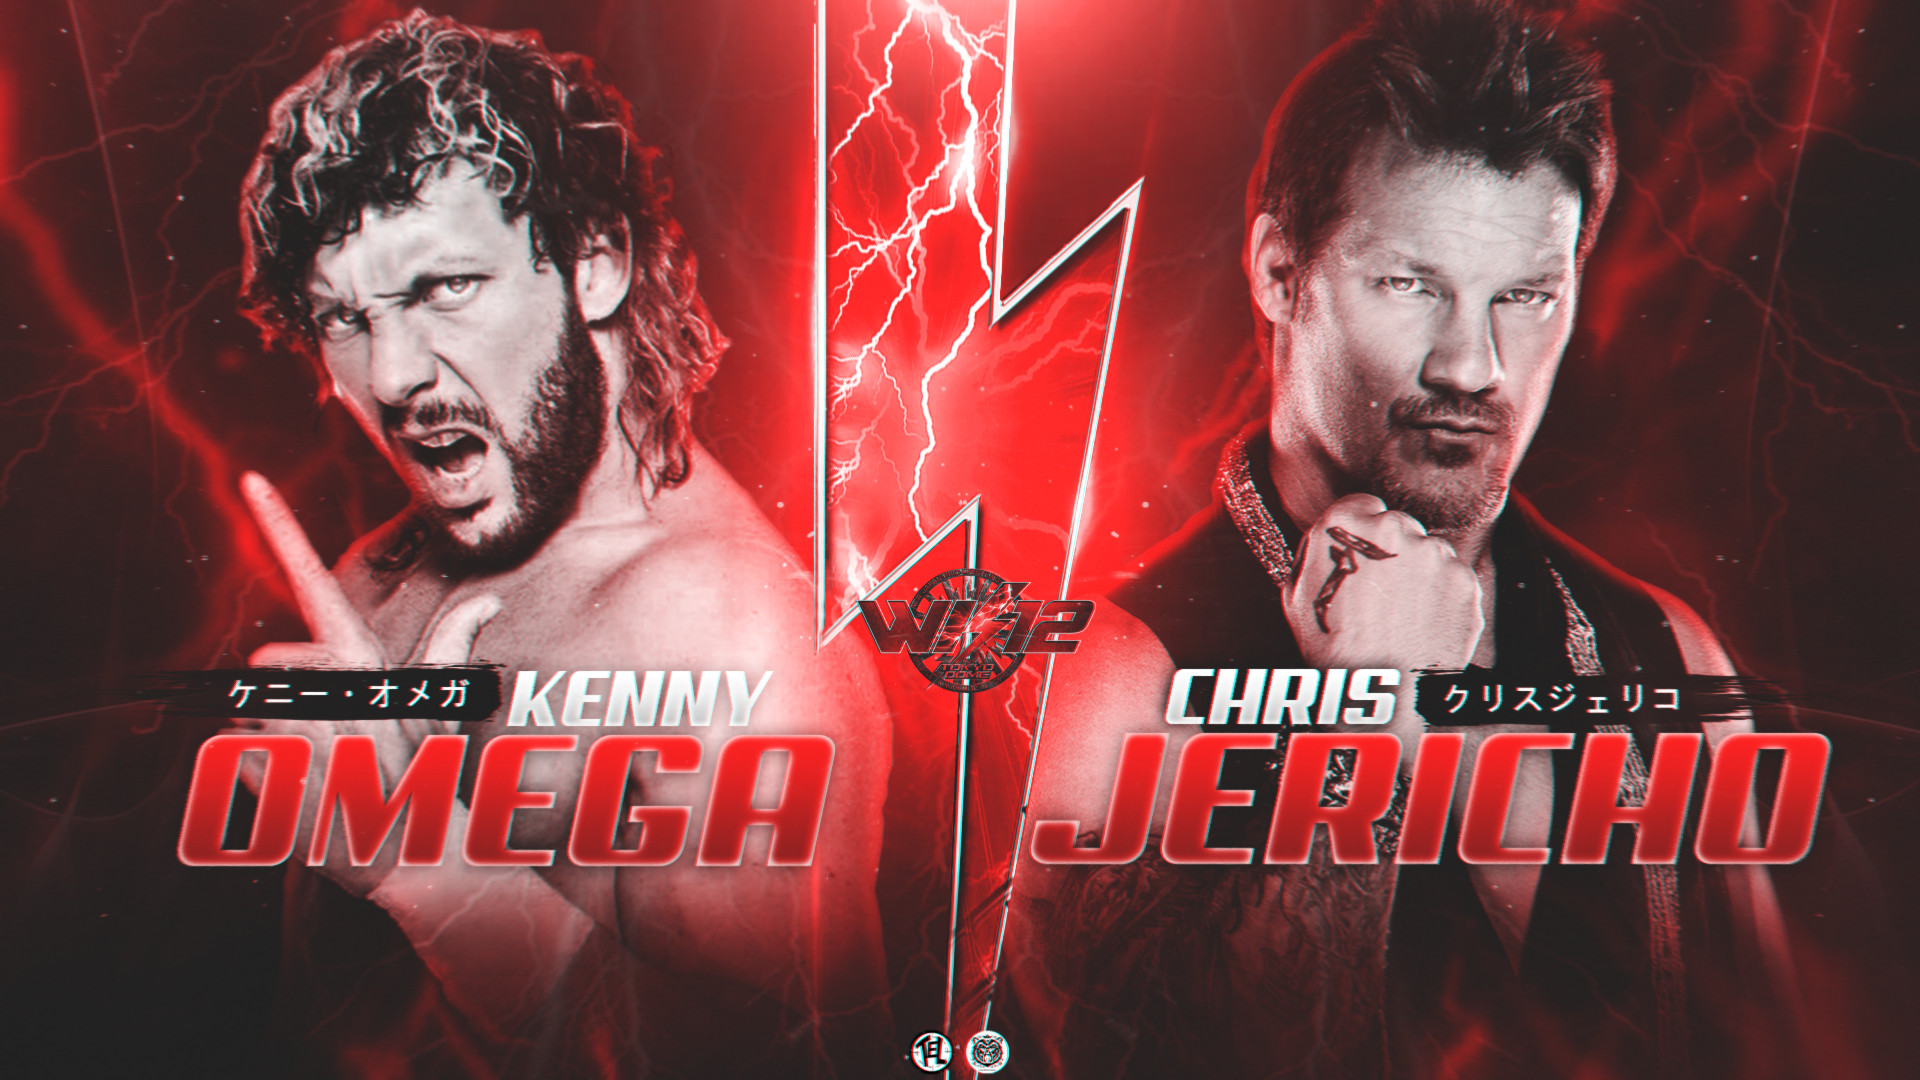 1920x1080 ... Kenny Omega vs Chris Jericho - WK 12 Custom Card by LastSurvivorY2J